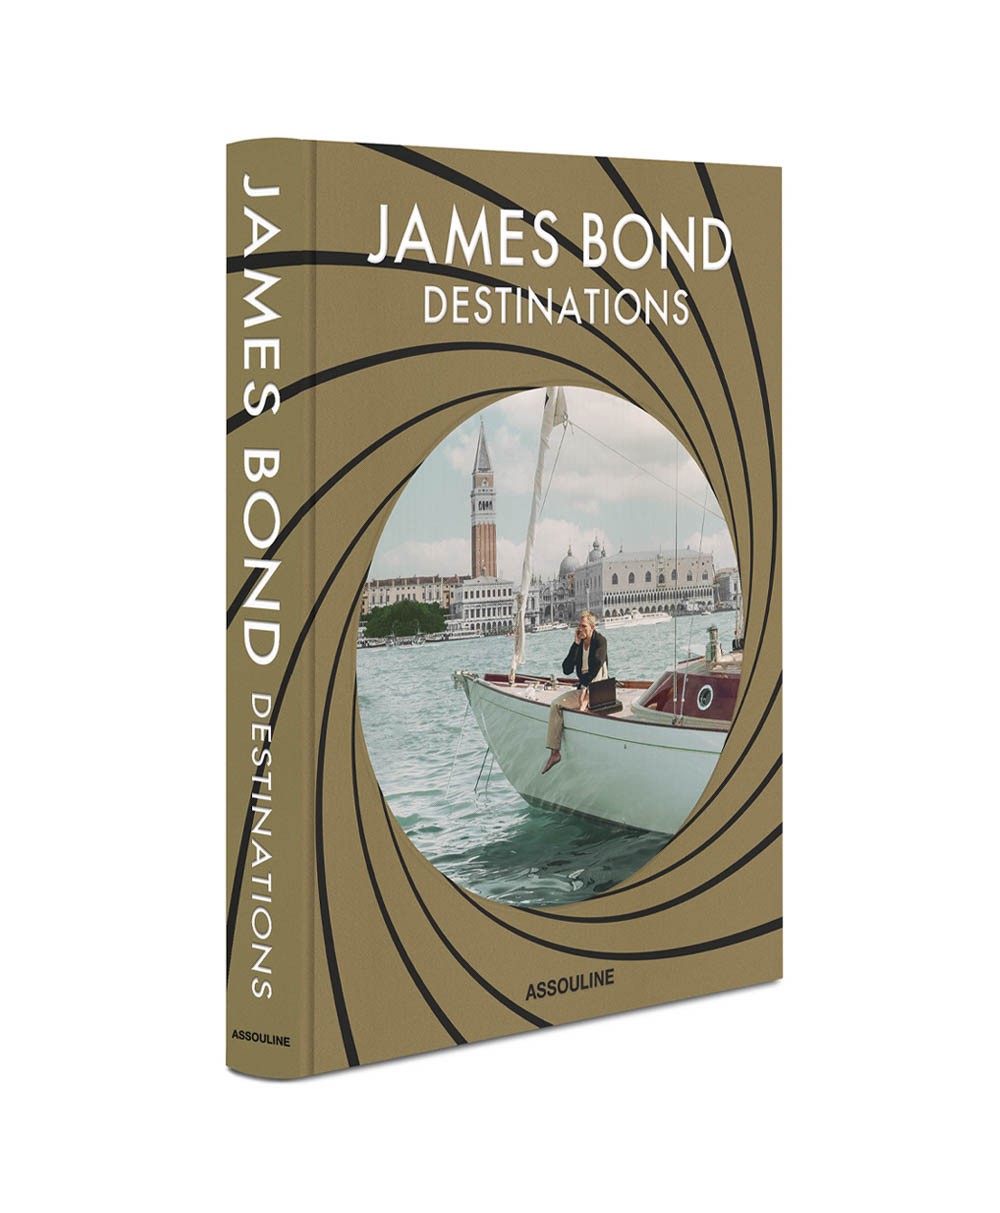 Cover des Bildbands „James Bond Destinations“ von Assouline im RAUM concept store 